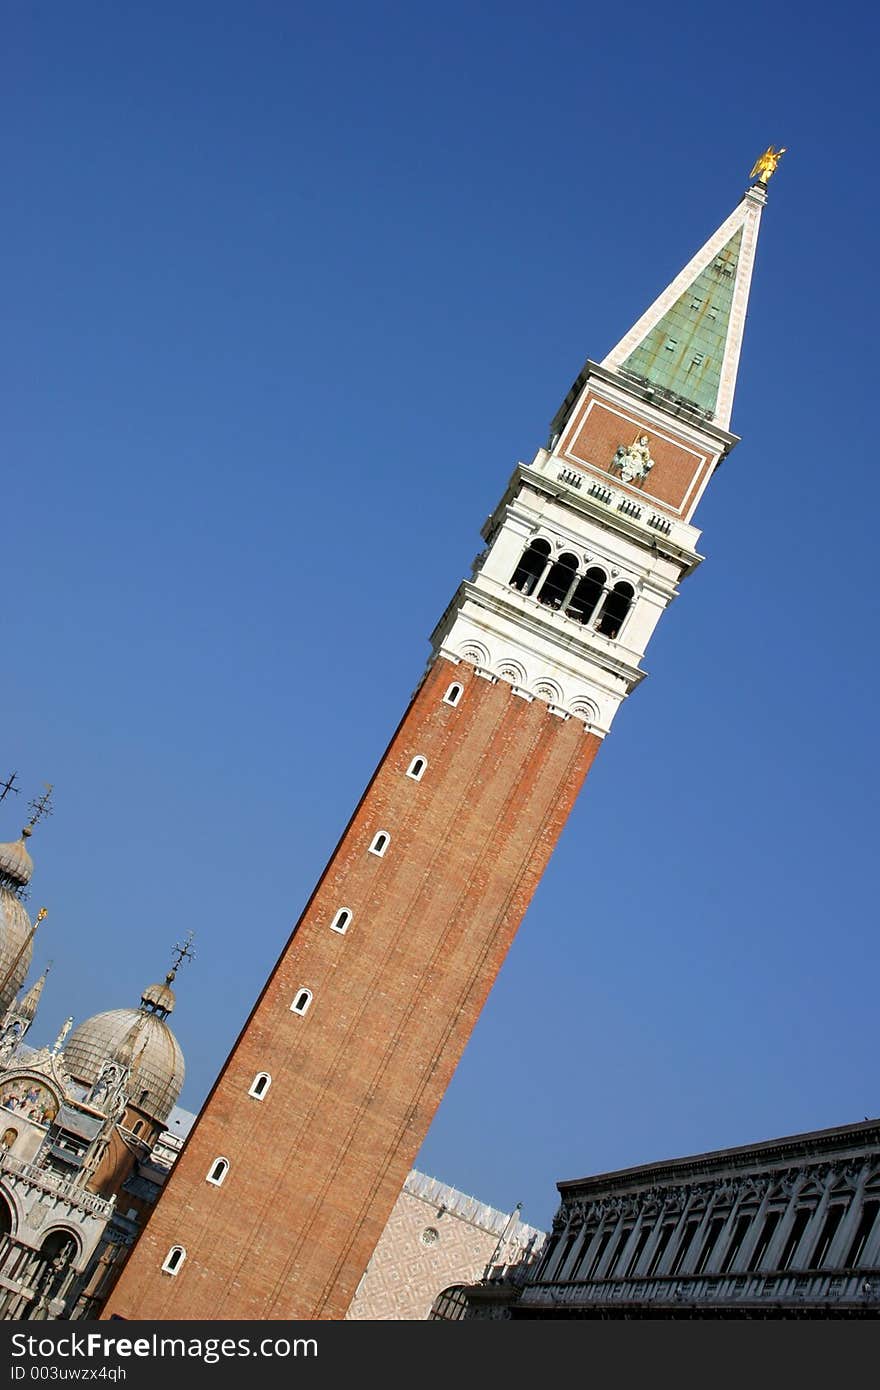 Campanile tower, St. Marks Square, Venice. Campanile tower, St. Marks Square, Venice